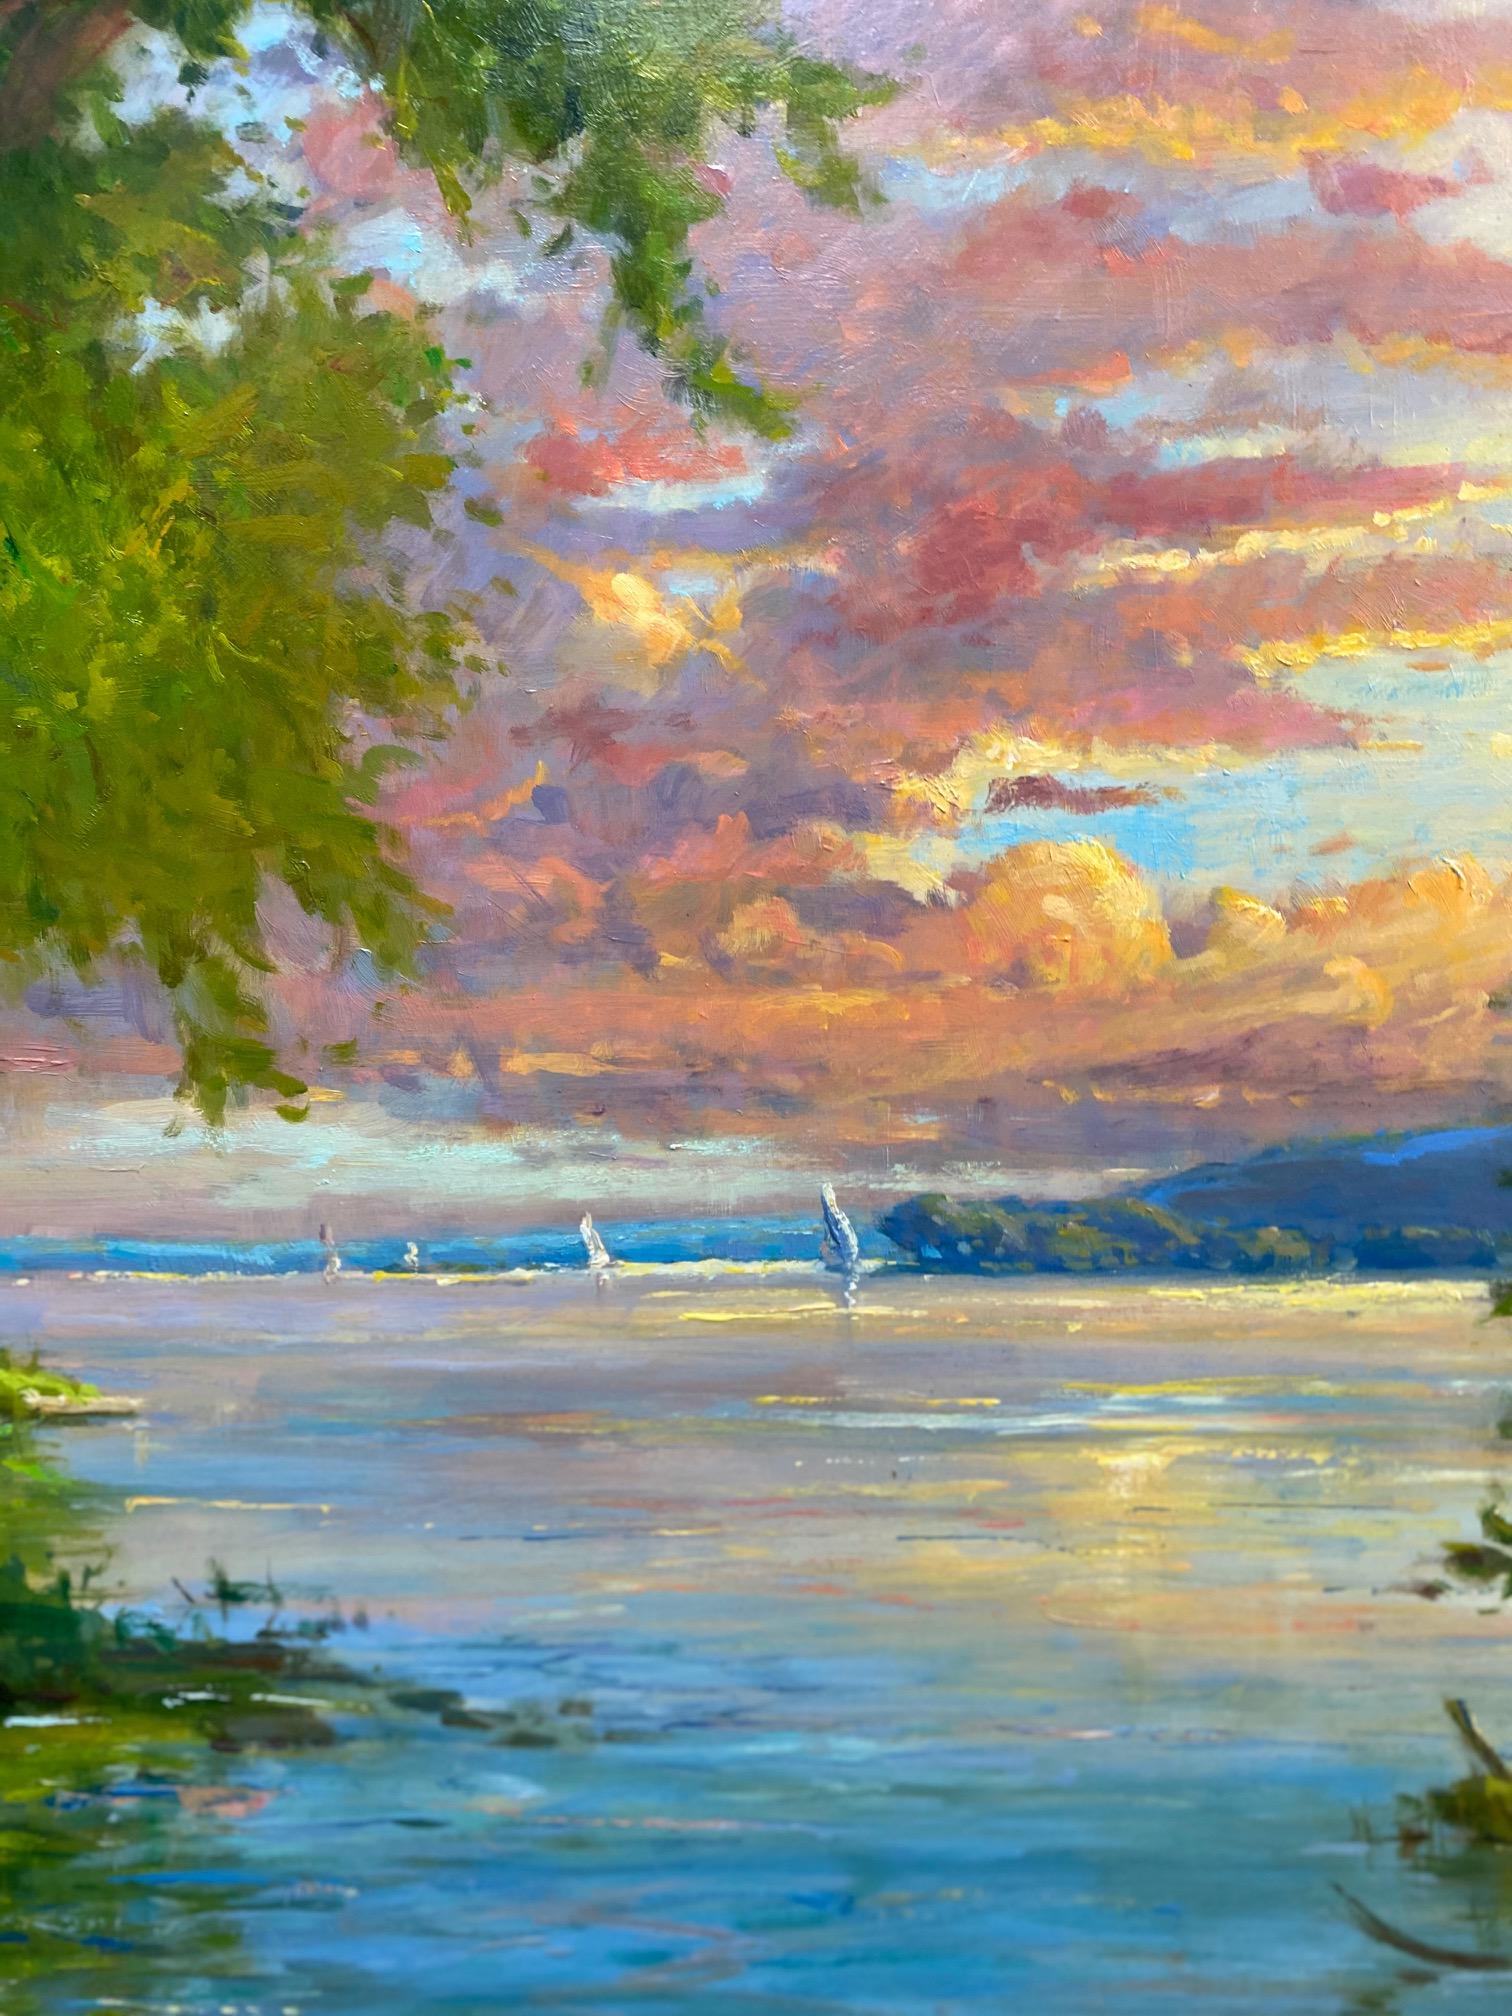 Glimpse from the Cove - Paysage marin impressionniste original 36x36 - Impressionnisme Painting par Jim Rodgers